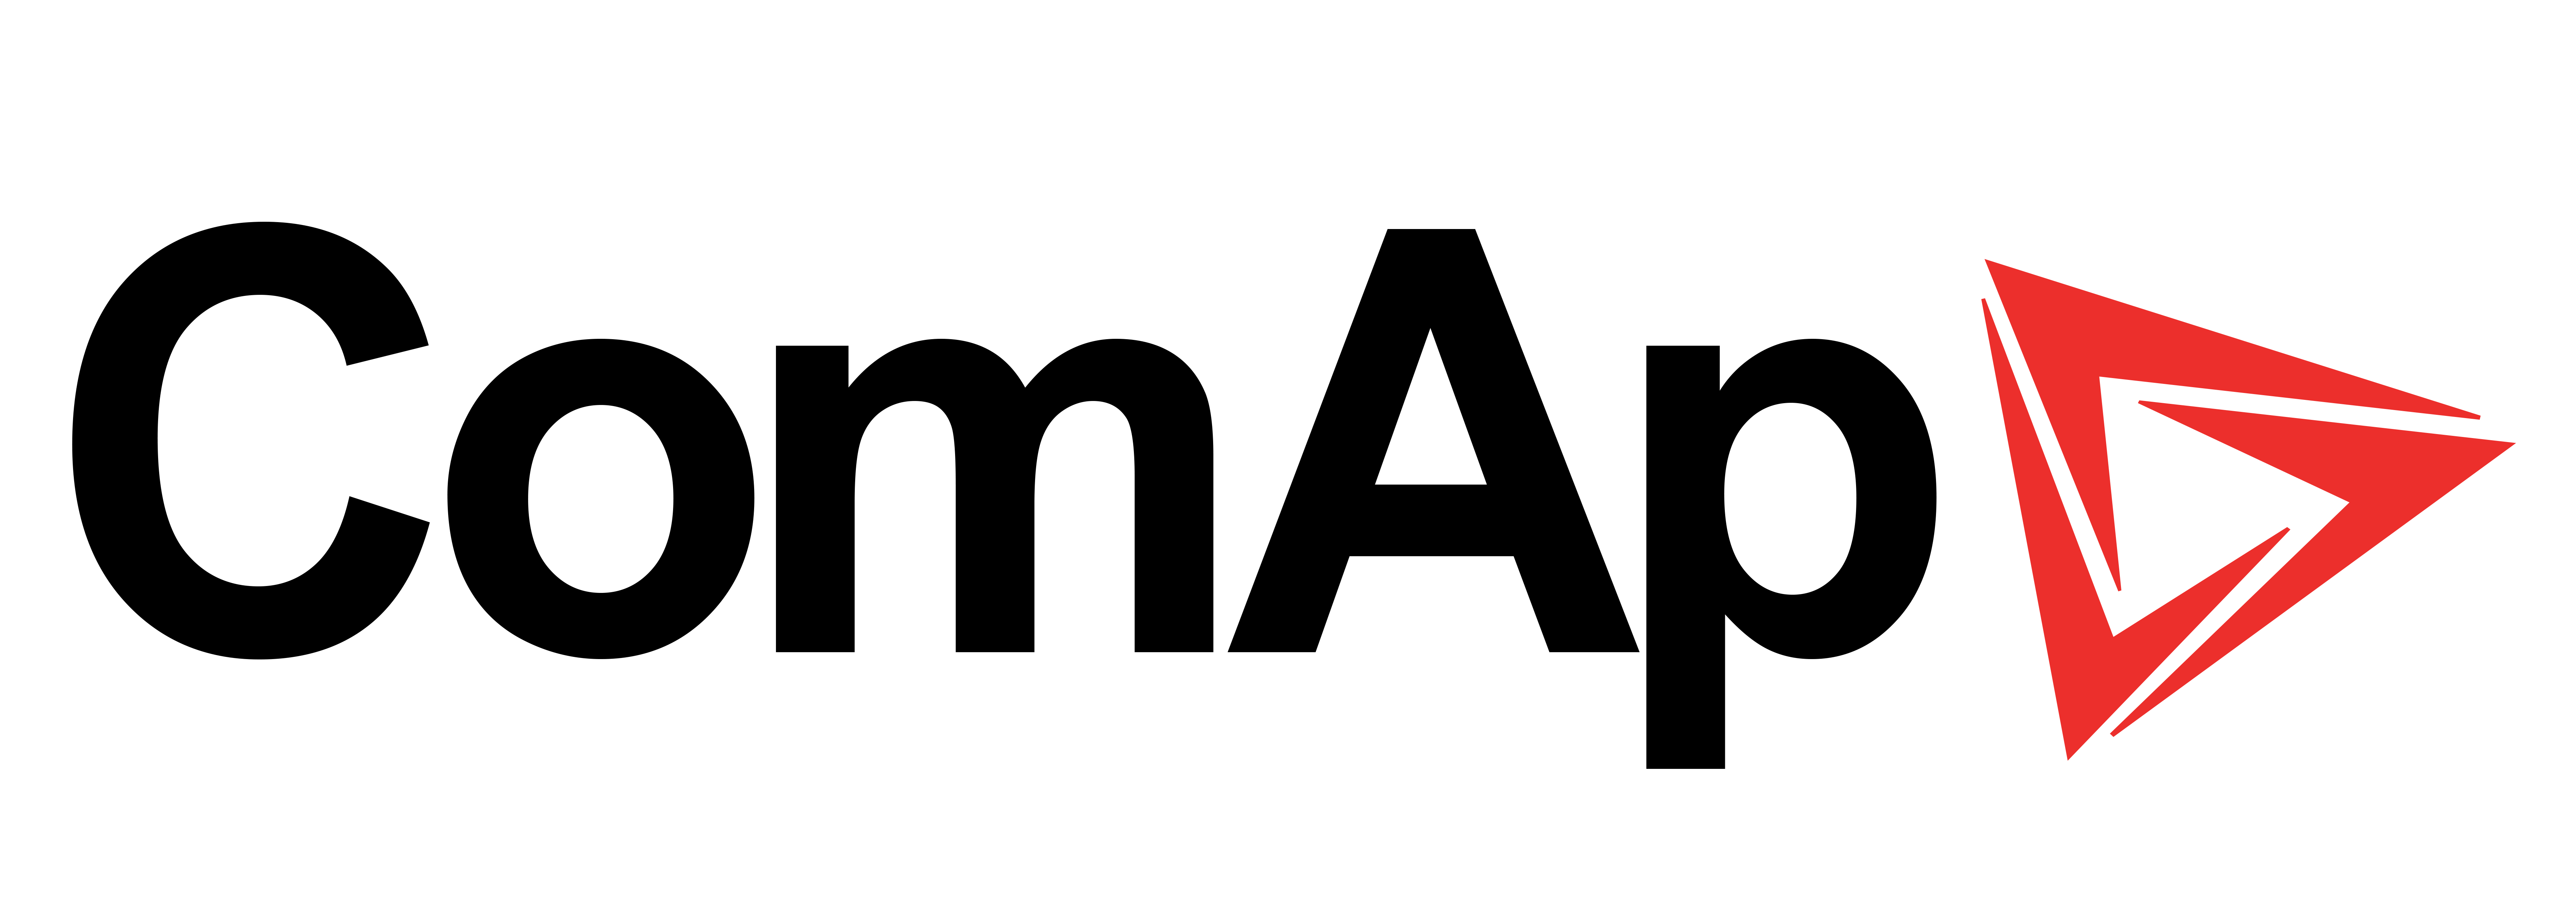 comap logo